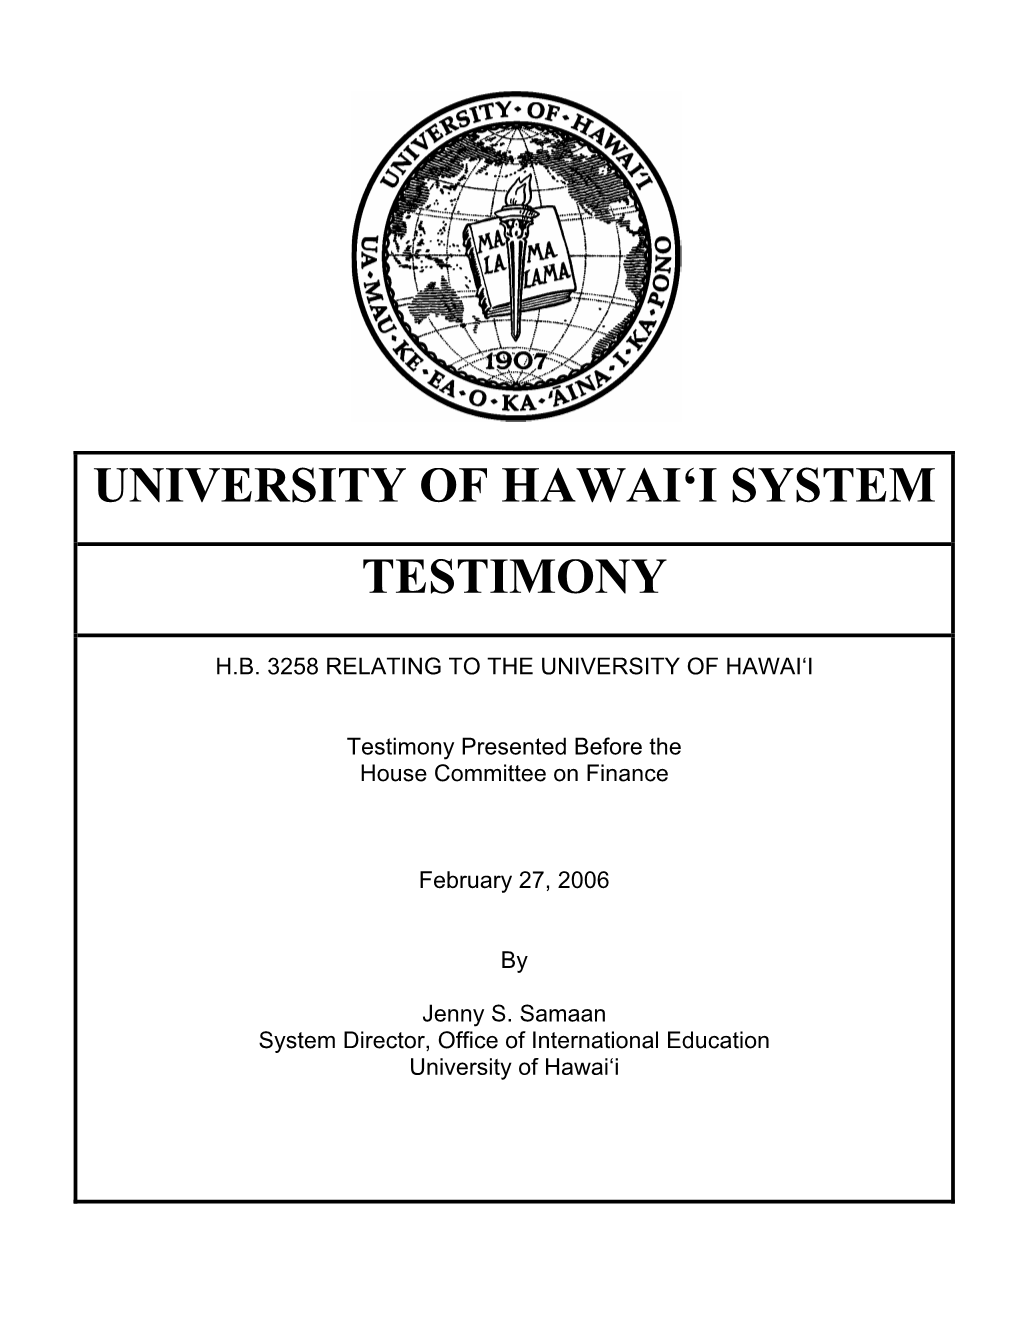 University of Hawai'i System Testimony